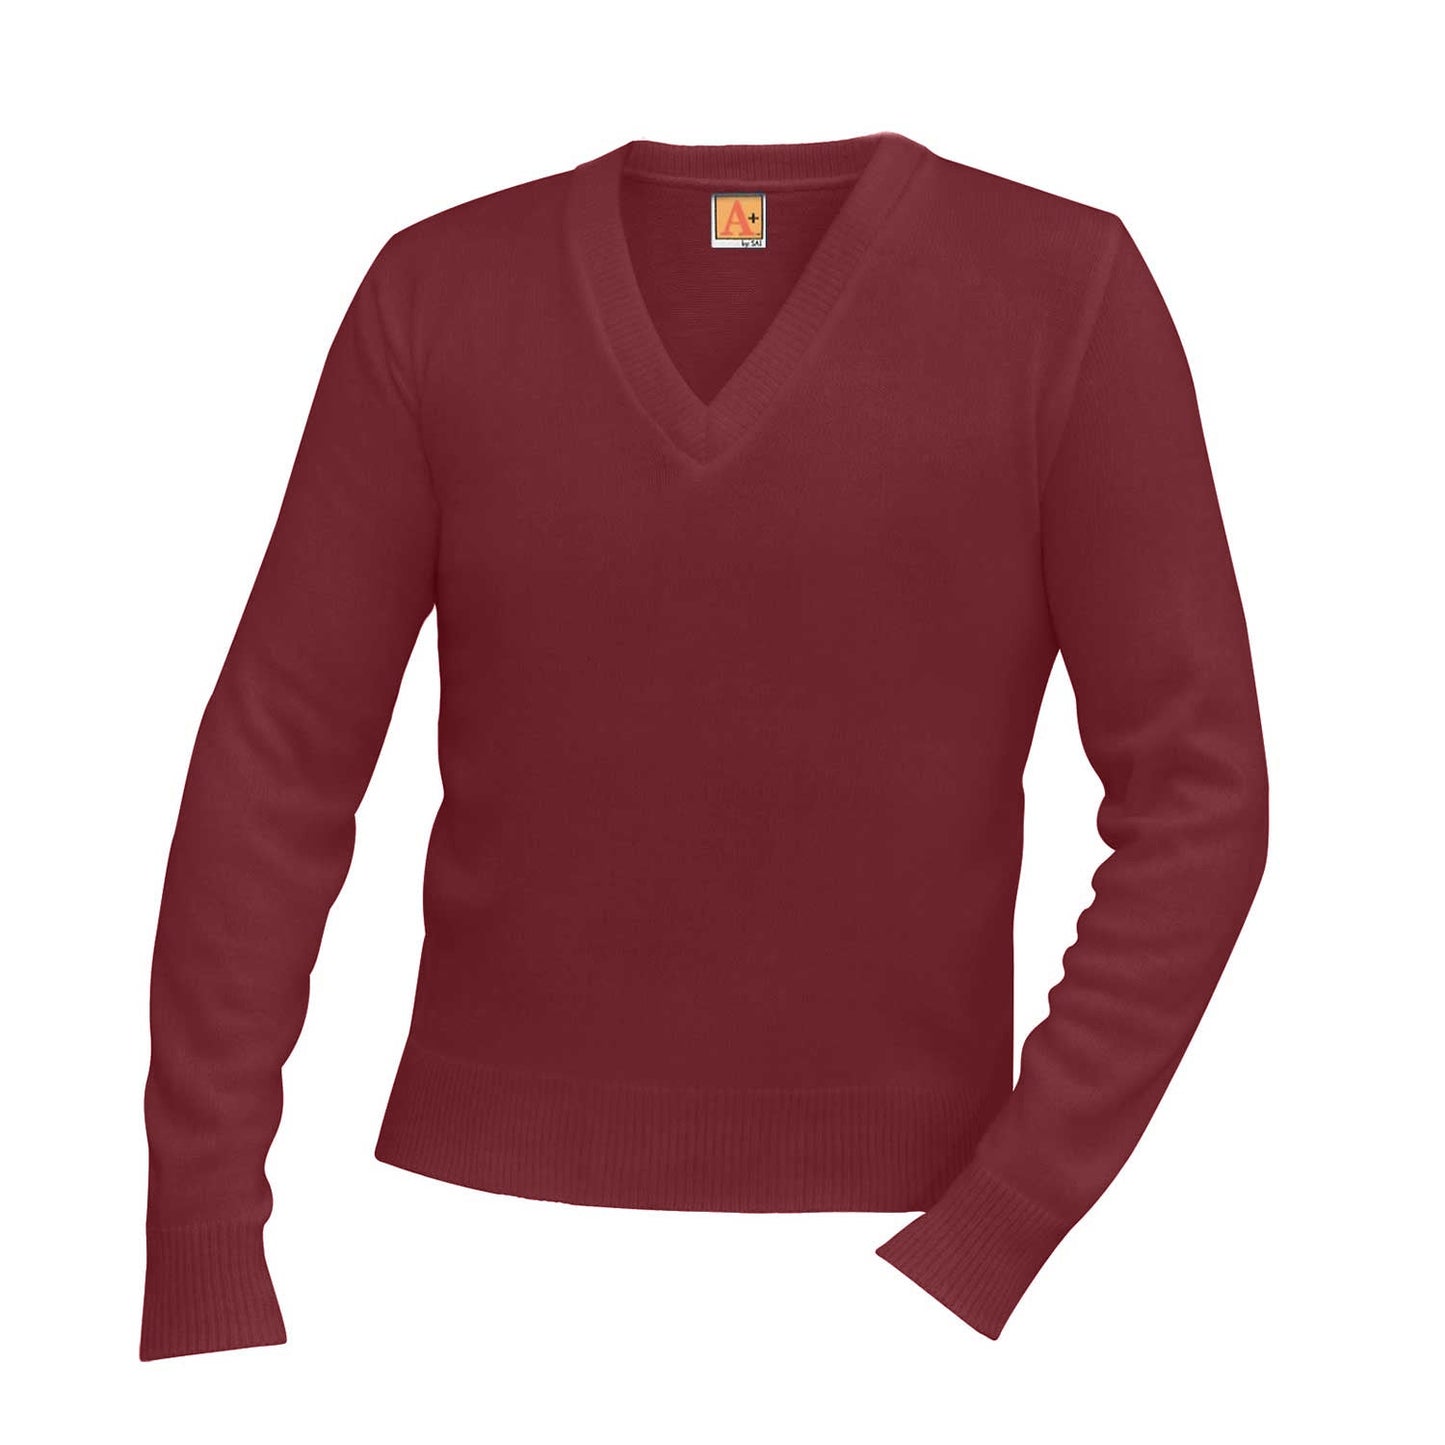 Unisex V-Neck Pullover Jersey Knit Sweater w/Logo - 1105